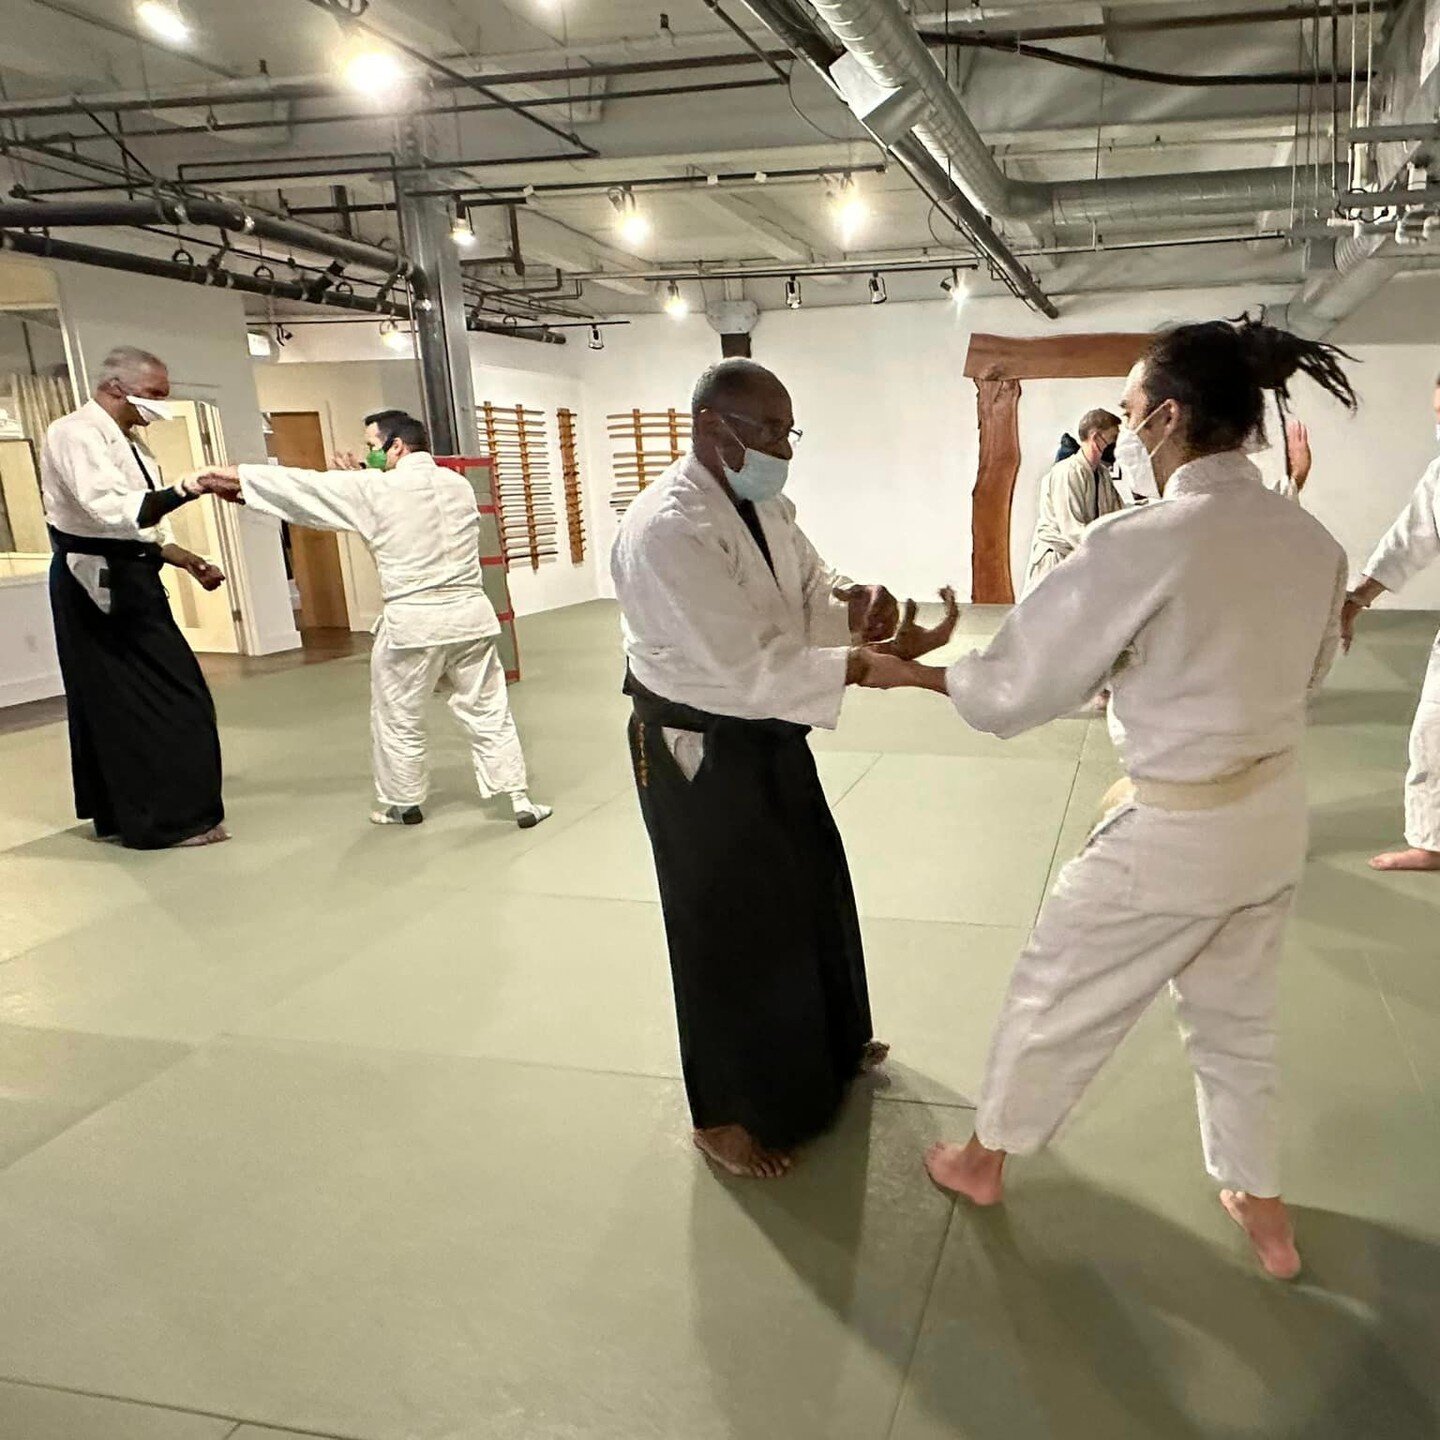 Nizam Taleb Sensei is celebrating his 50th year in #aikido. He will be teaching tonight Wednesday, Oct 19, at 6p and Saturday, Oct 22, at 11a. All are welcome to attend. 

#aiki #aikikai #aikidoaikikai #ukemi #martialarts #philadelphia 

Photo courte